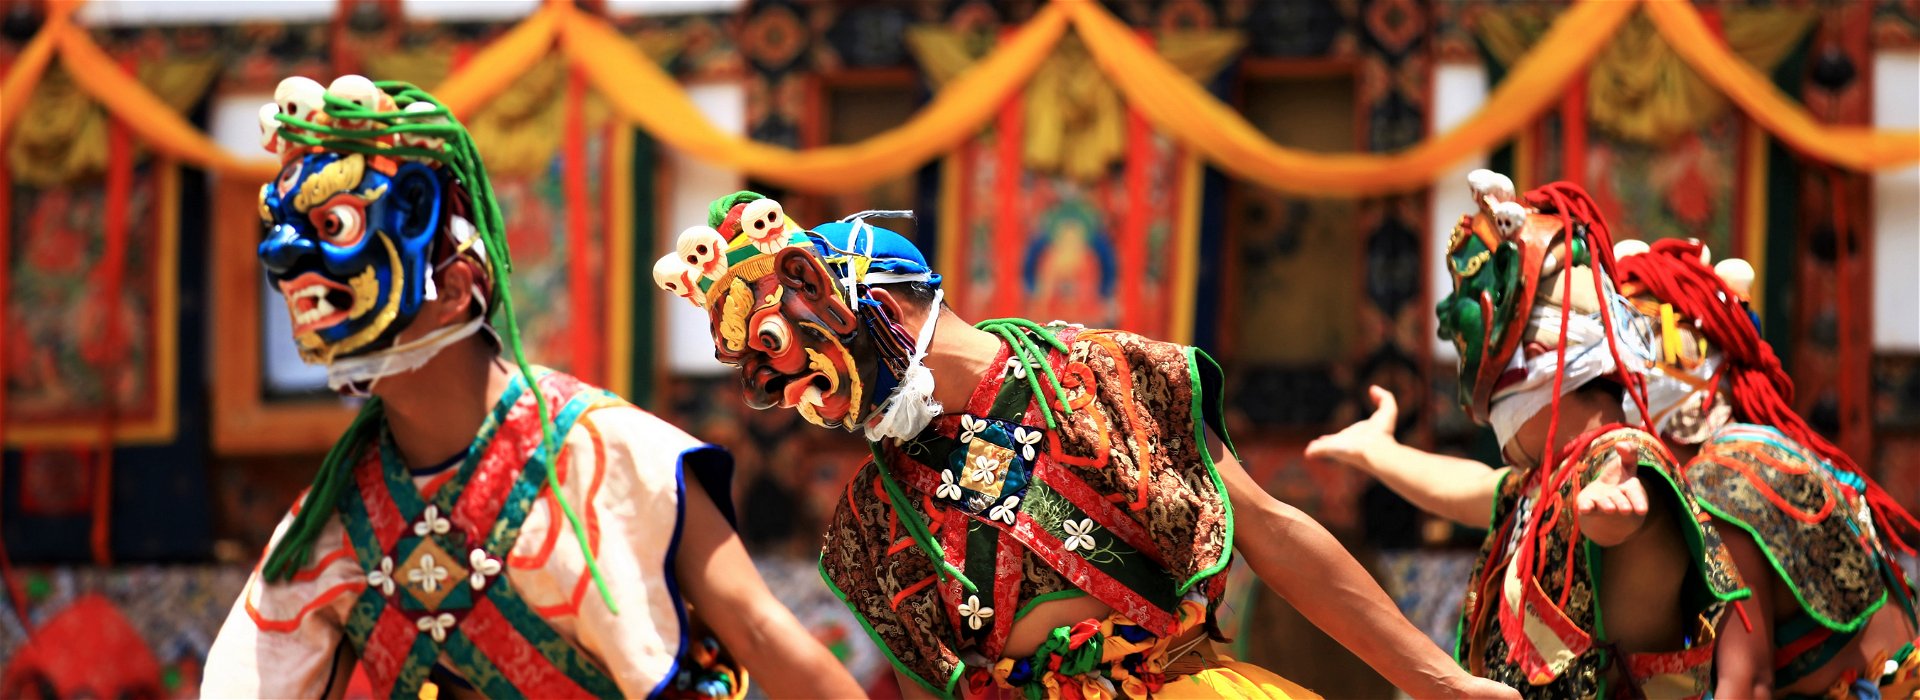 Bhutan Festival Guide: 8 of the best celebrations